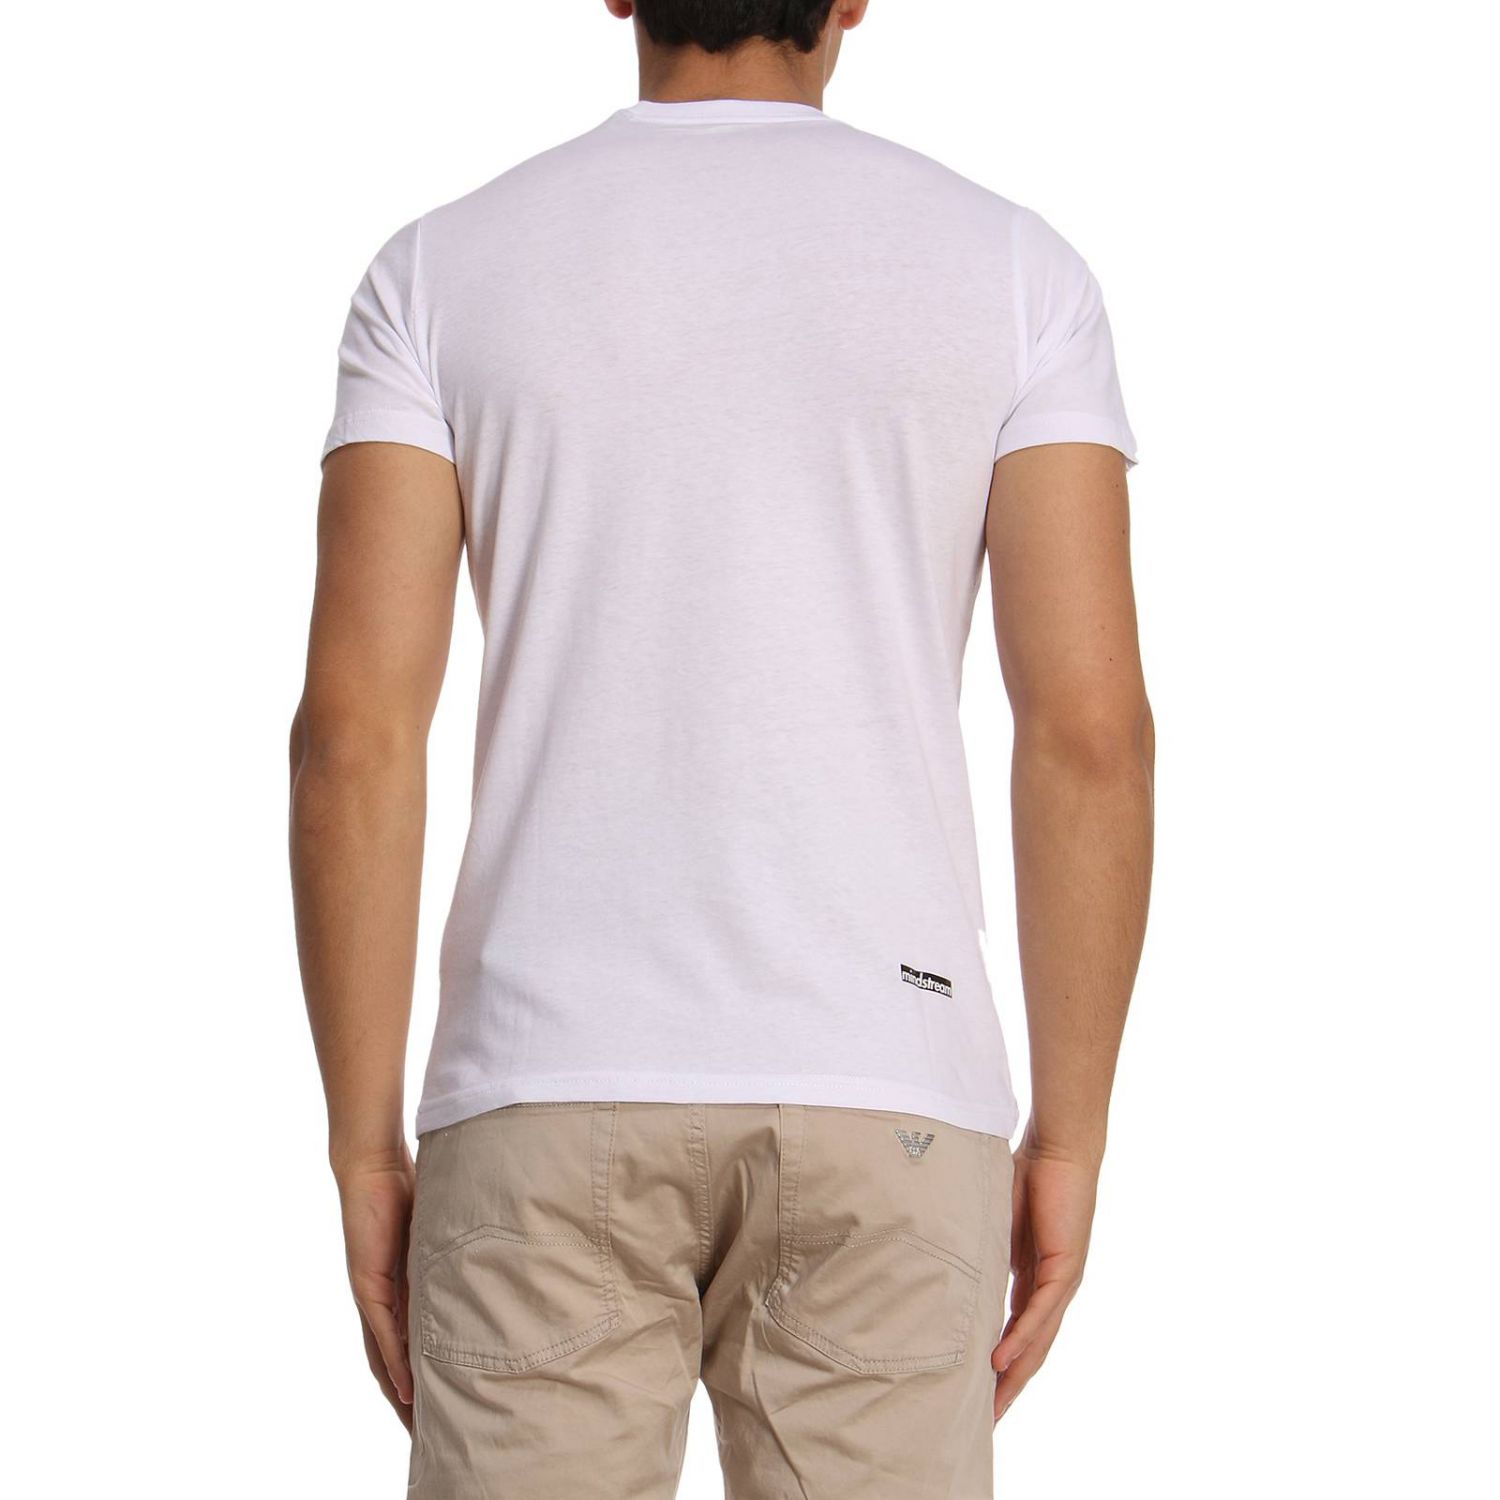 Mindstream Outlet: T-shirt men | T-Shirt Mindstream Men White | T-Shirt ...